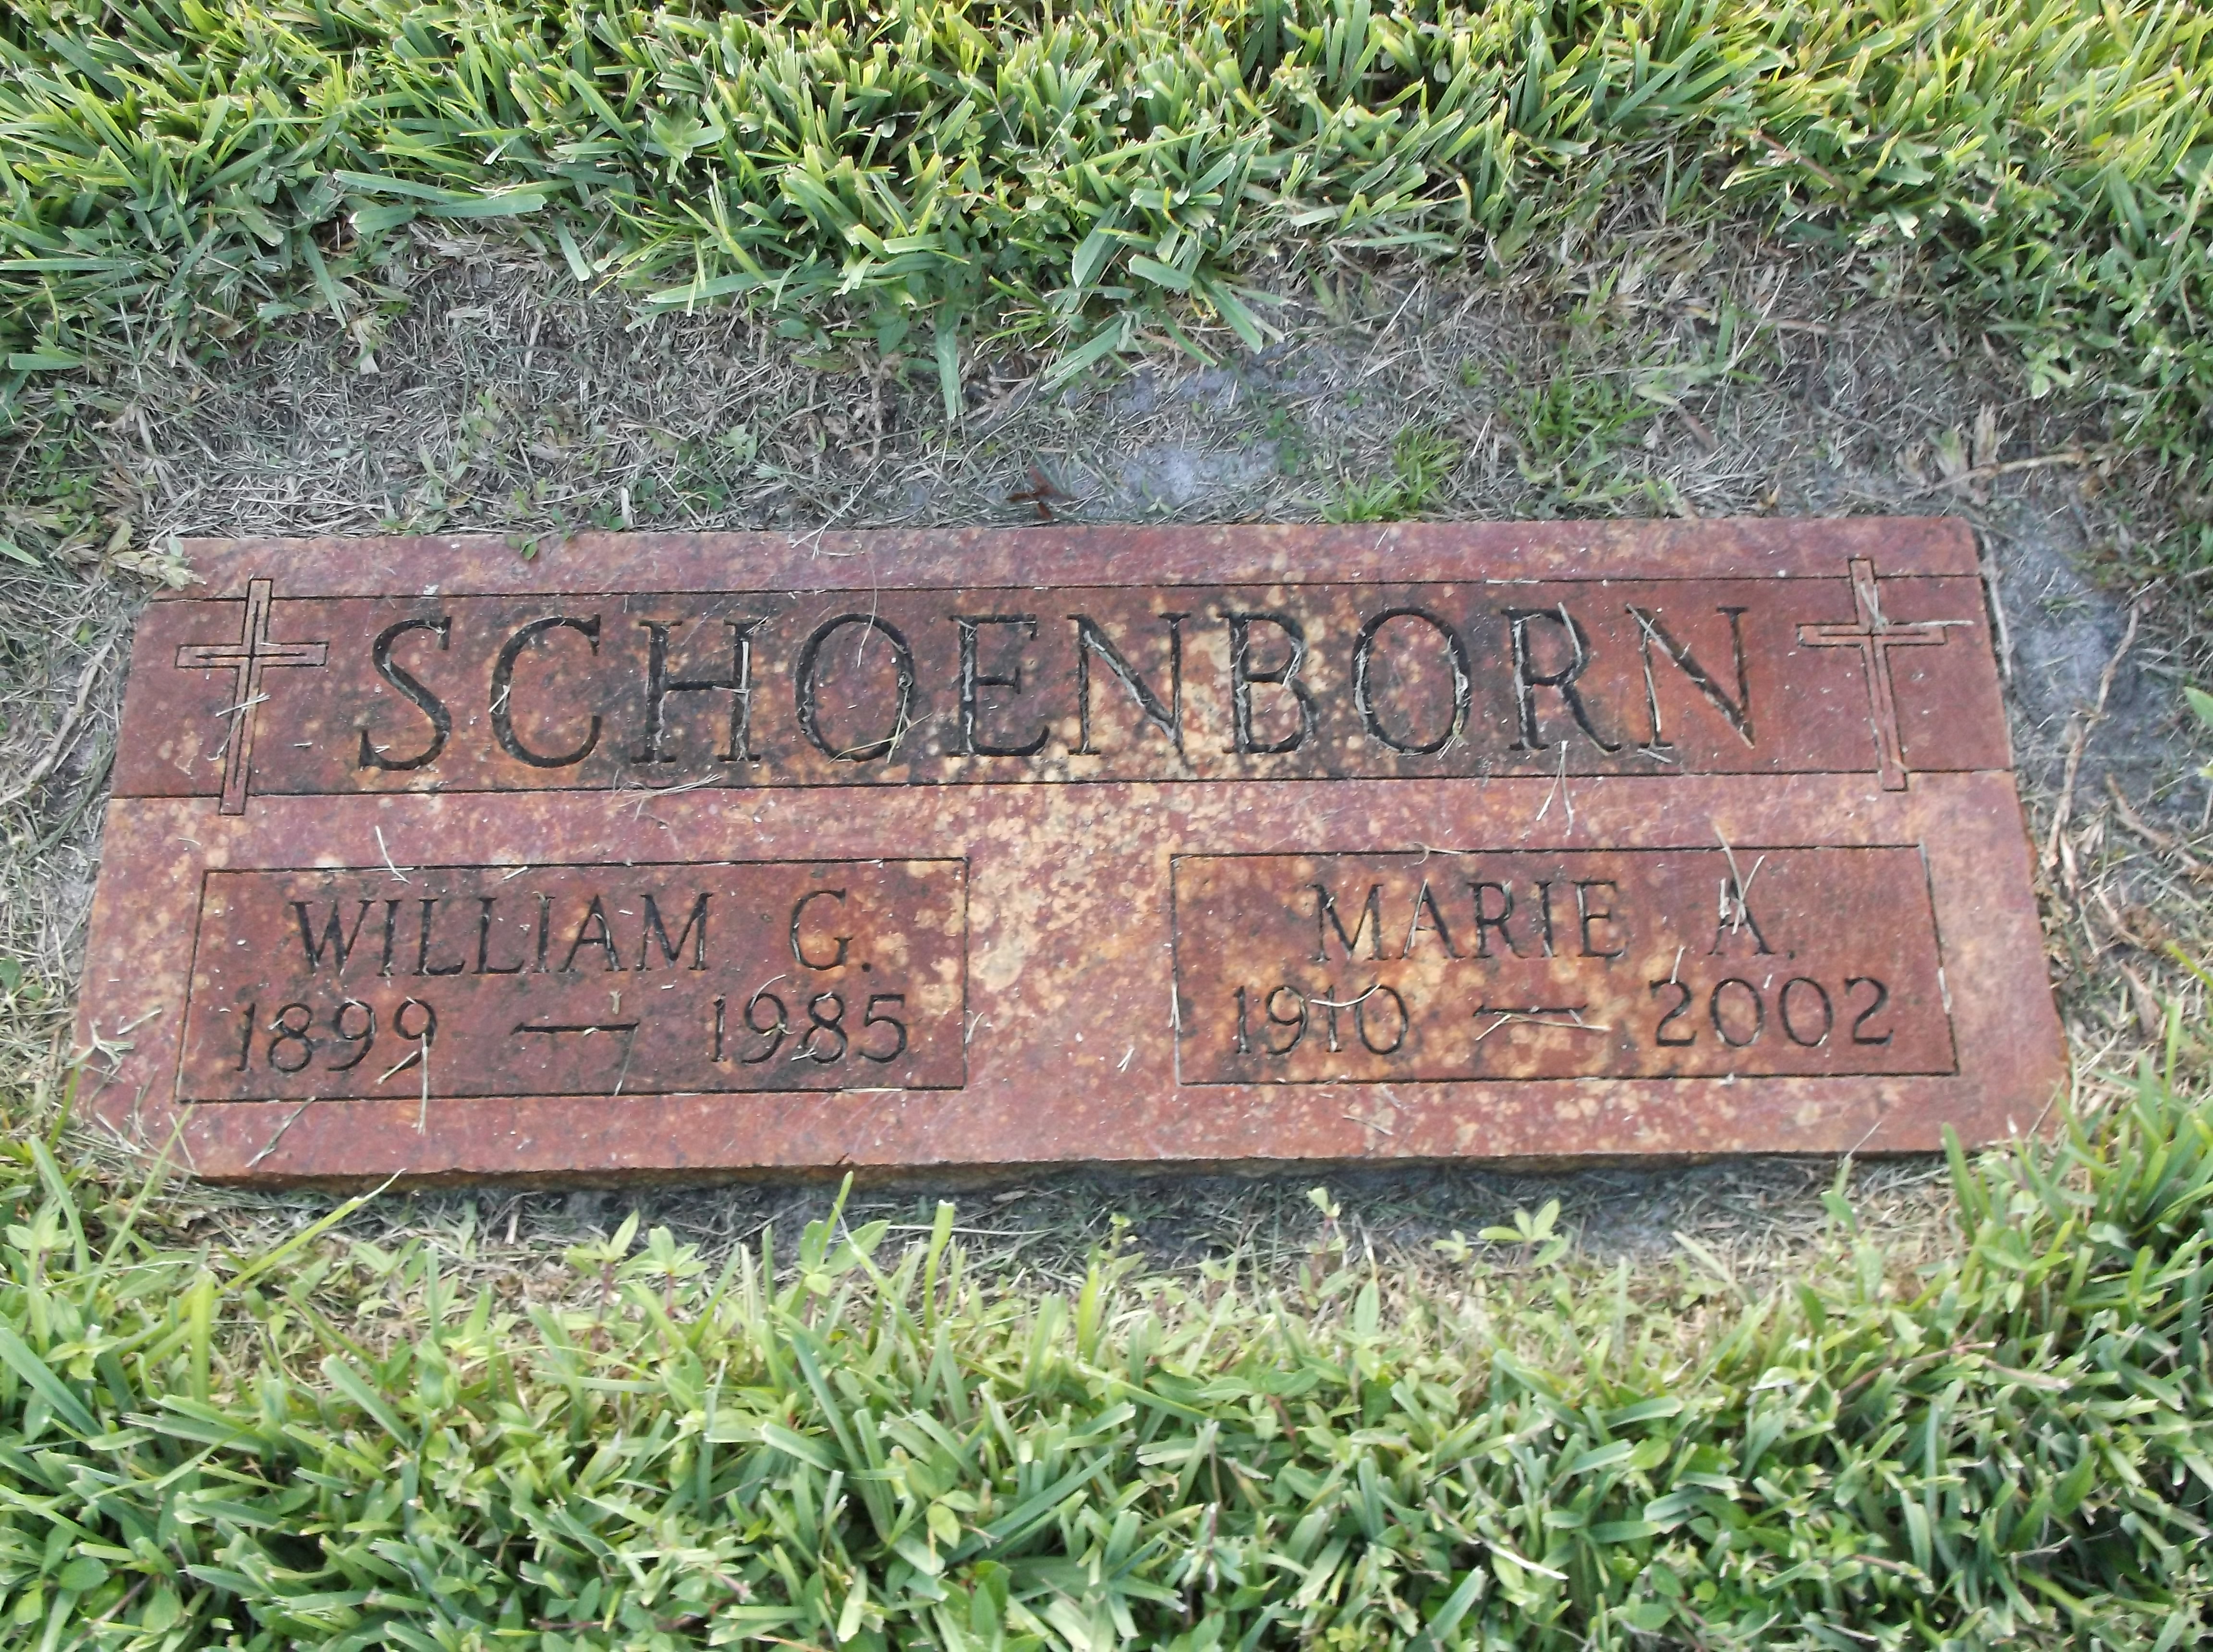 William G Schoenborn